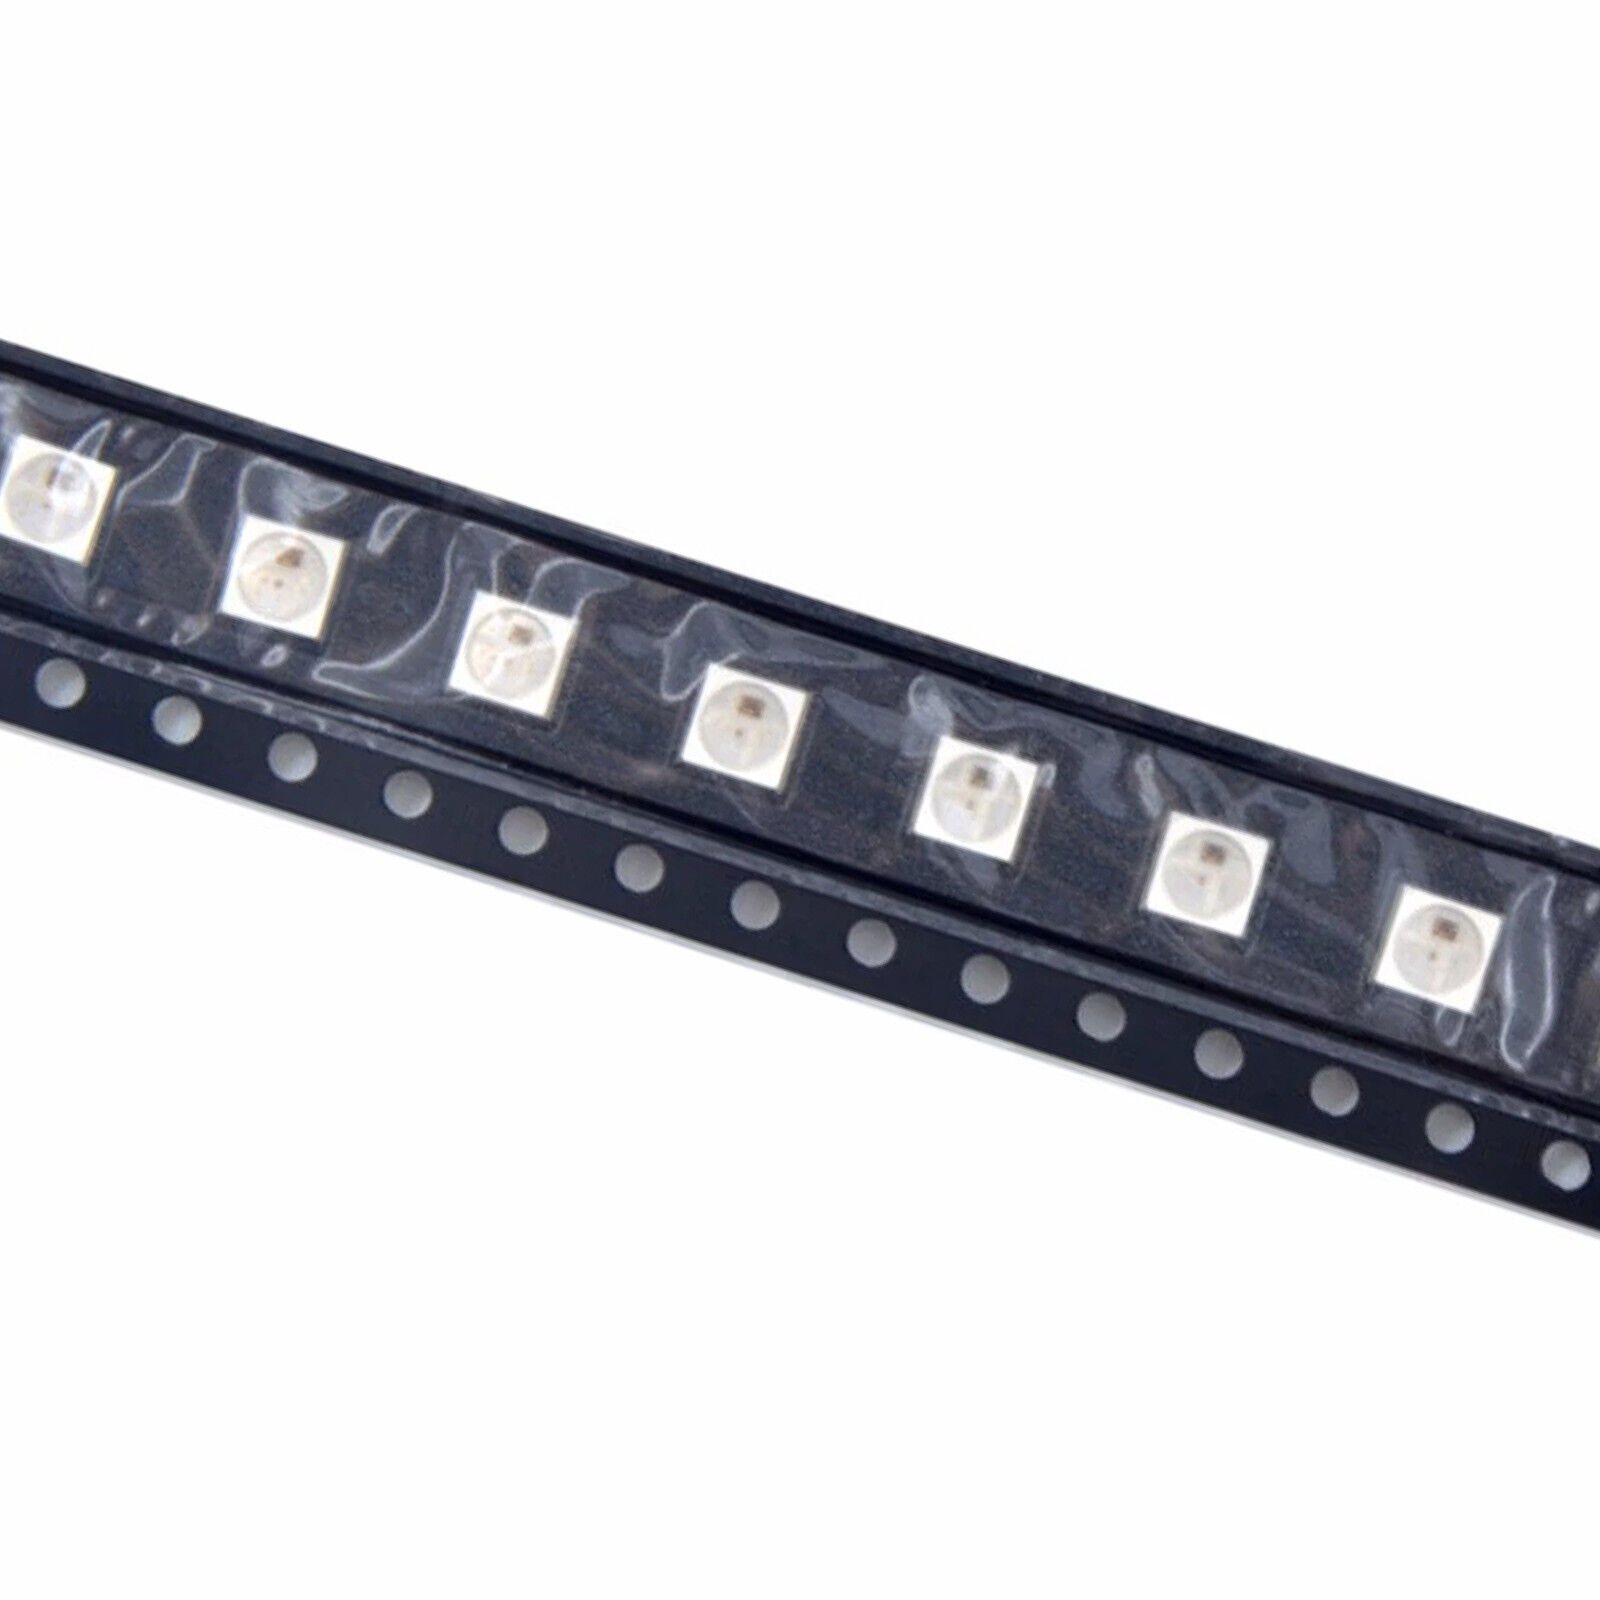 SK6812 MINI RGB LED 10pcs for Mechanical Keyboard Backlight Underglow